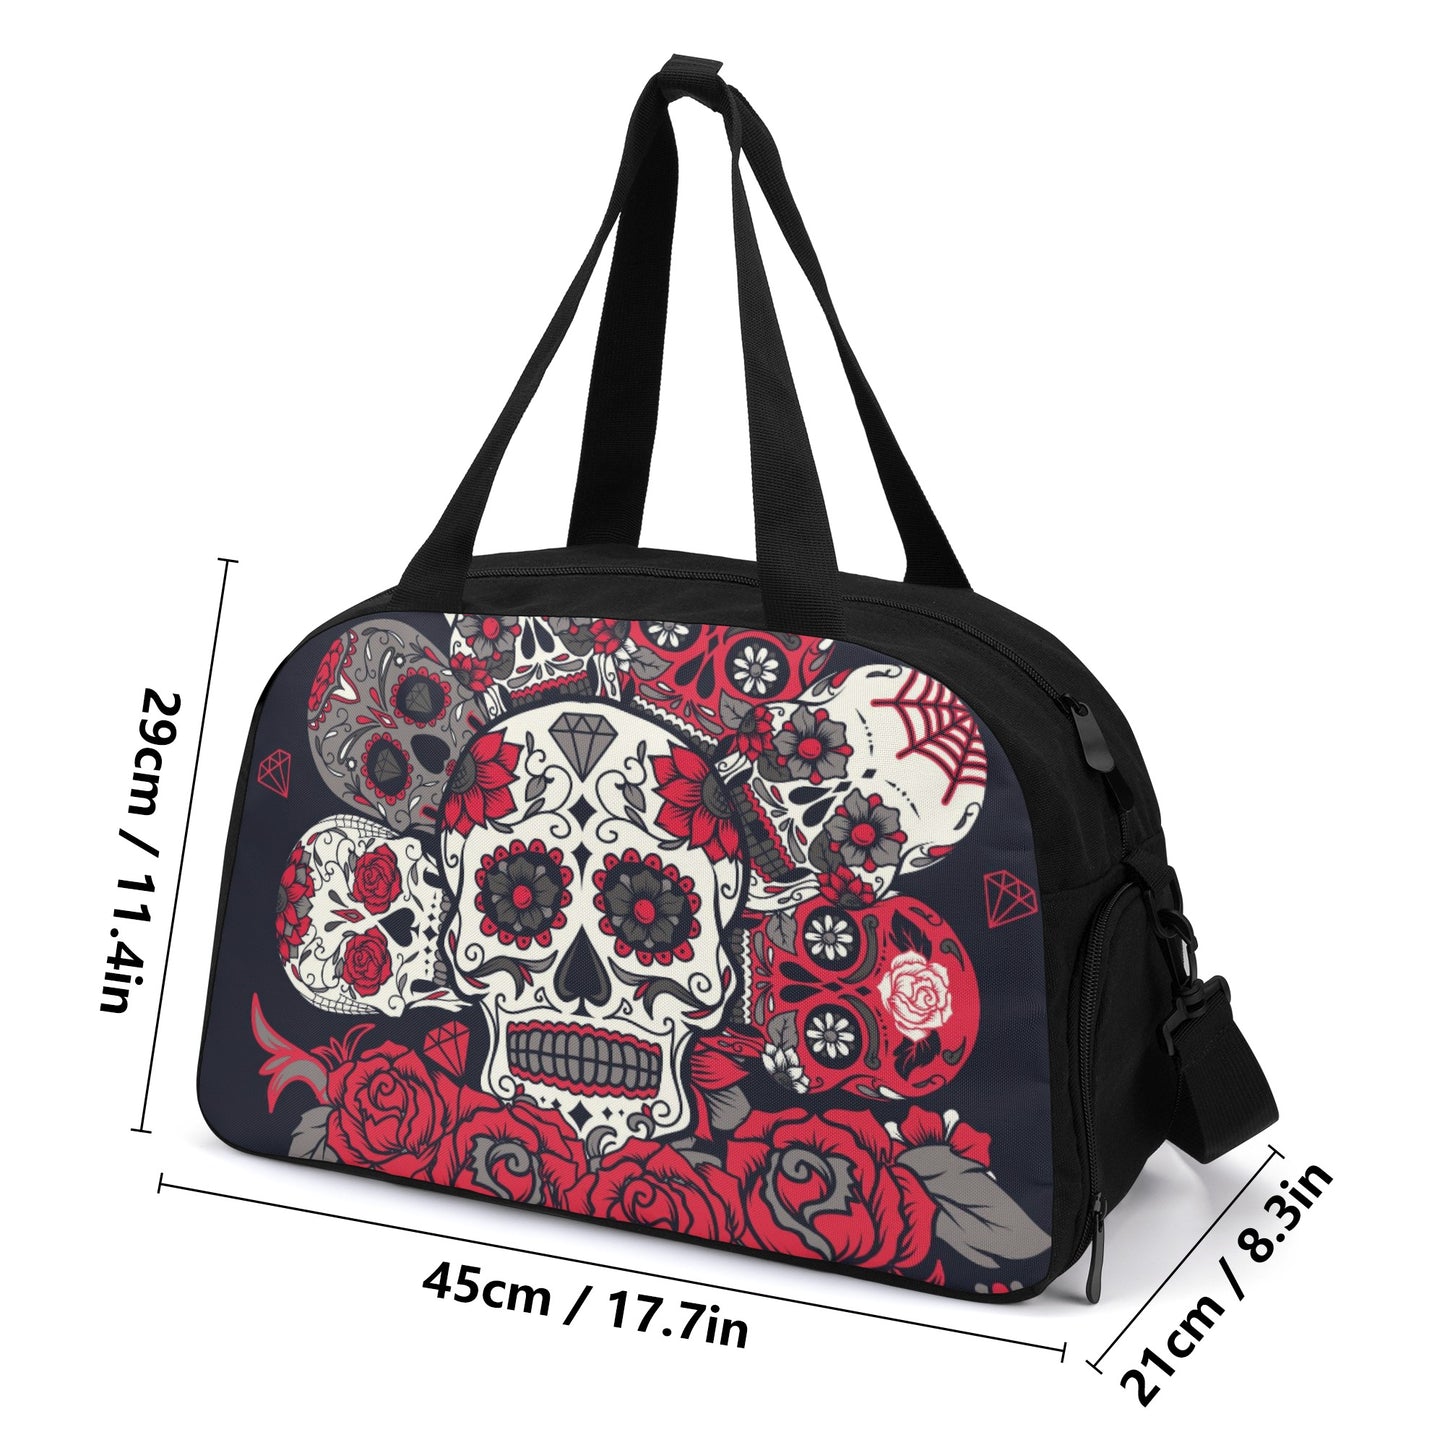 Sugar skull candy skulls pattern Travel Luggage Bag